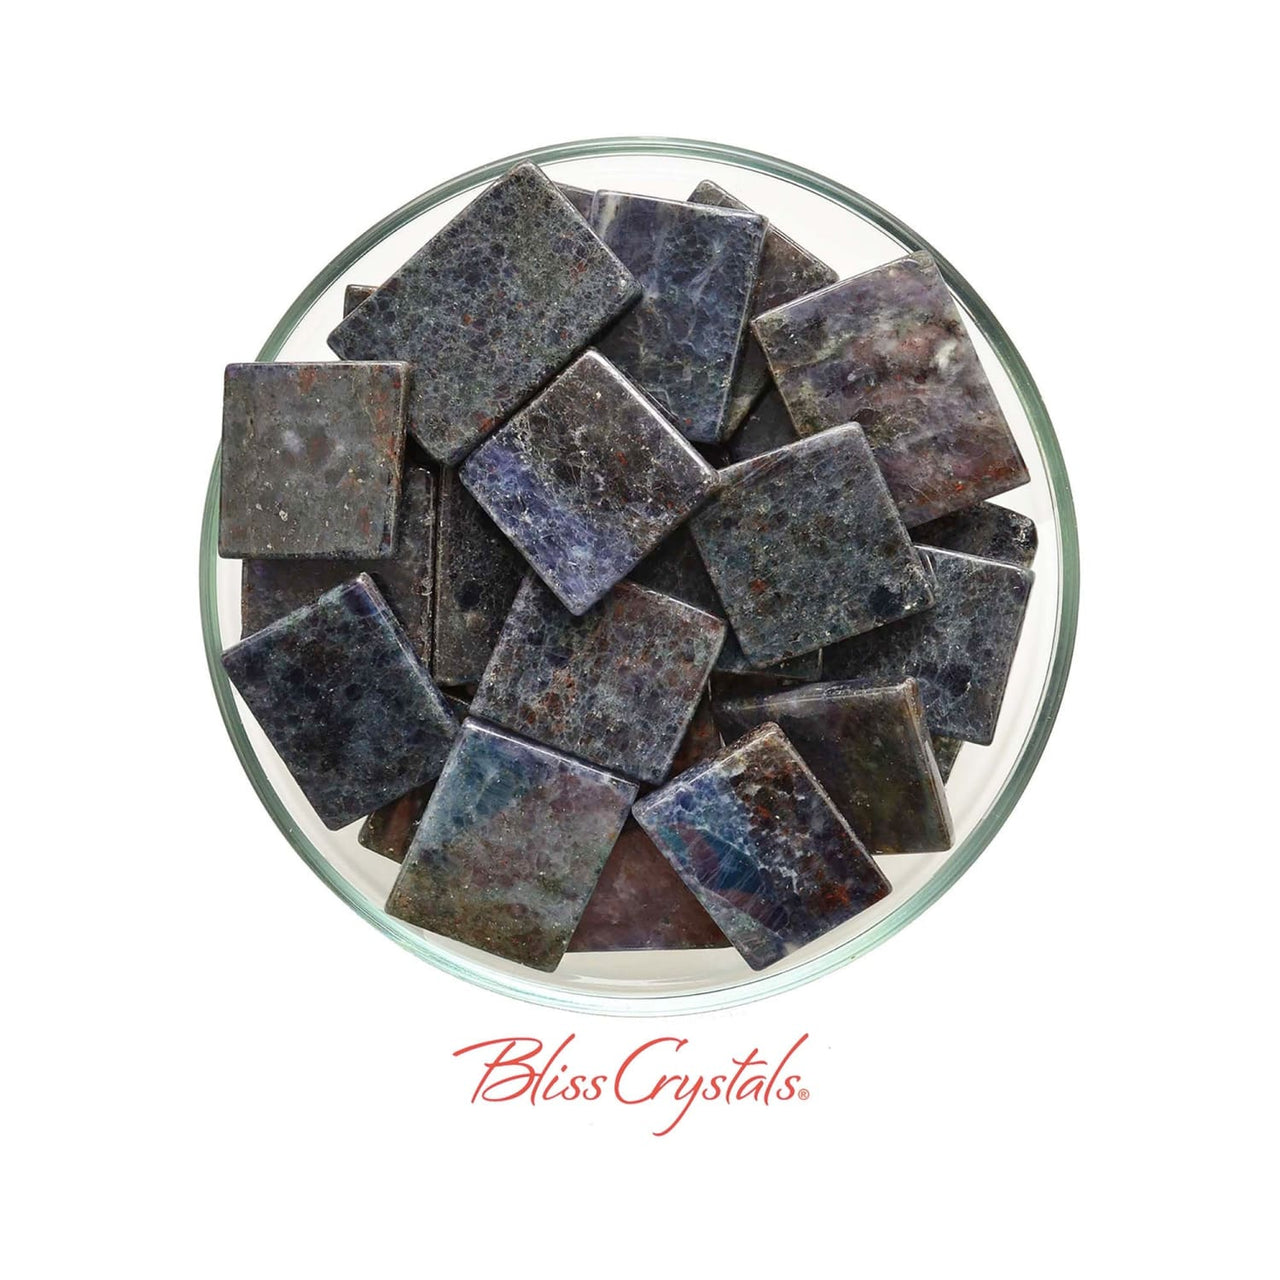 1 IOLITE Flat Slice Tumbled Stone Mineral Crystal Healing 